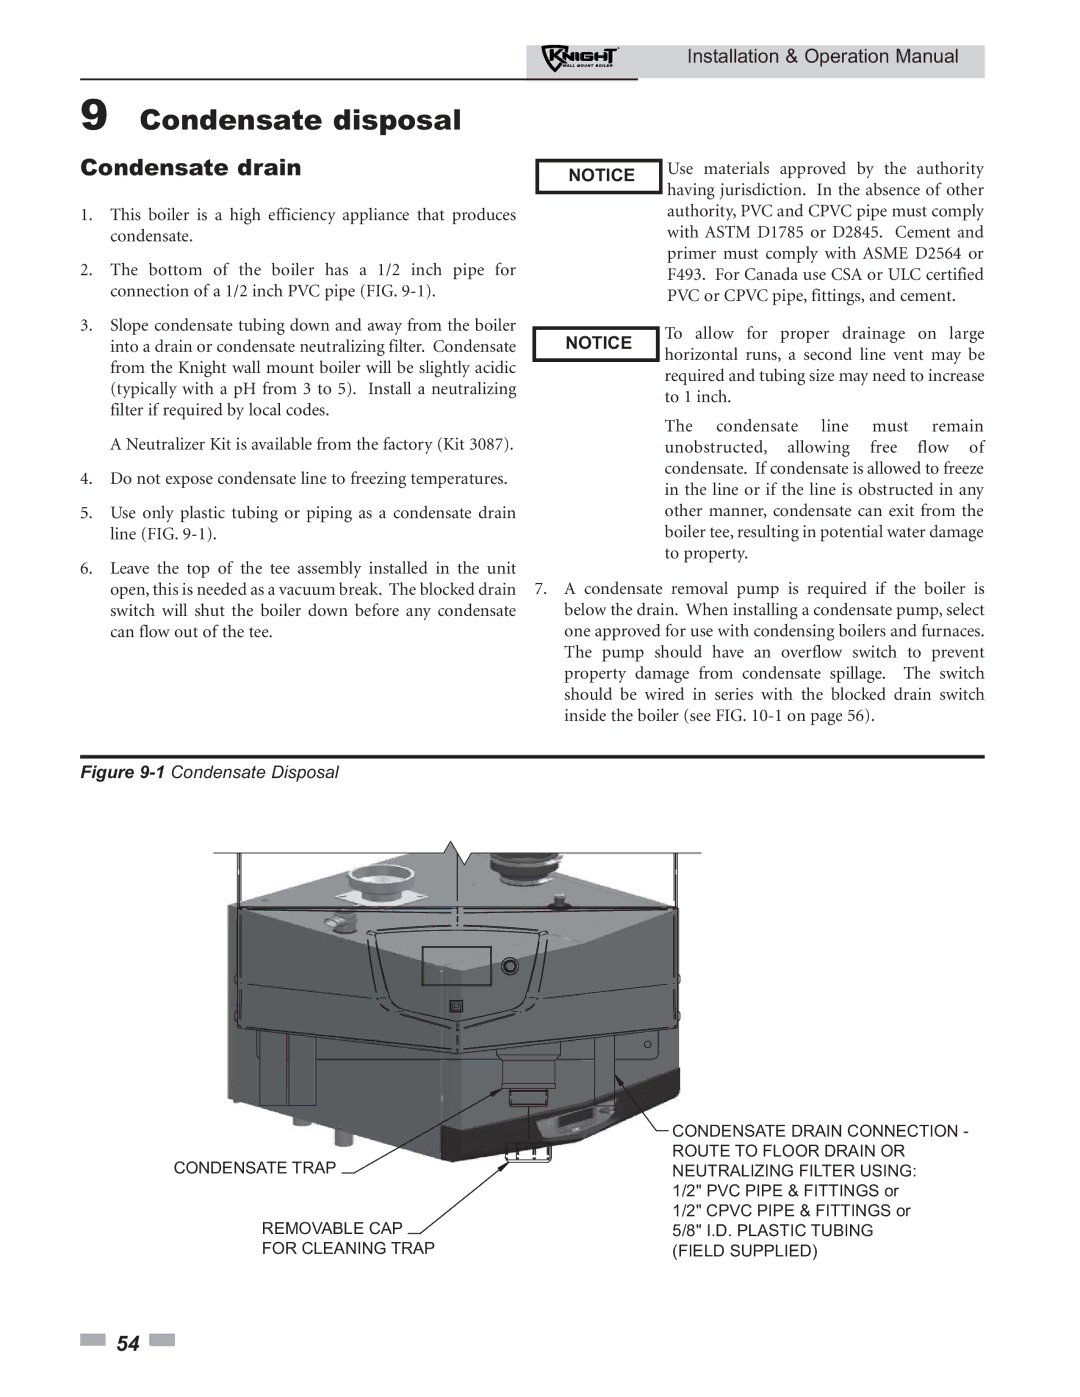 Lochinvar 51 operation manual Condensate disposal, Condensate drain 